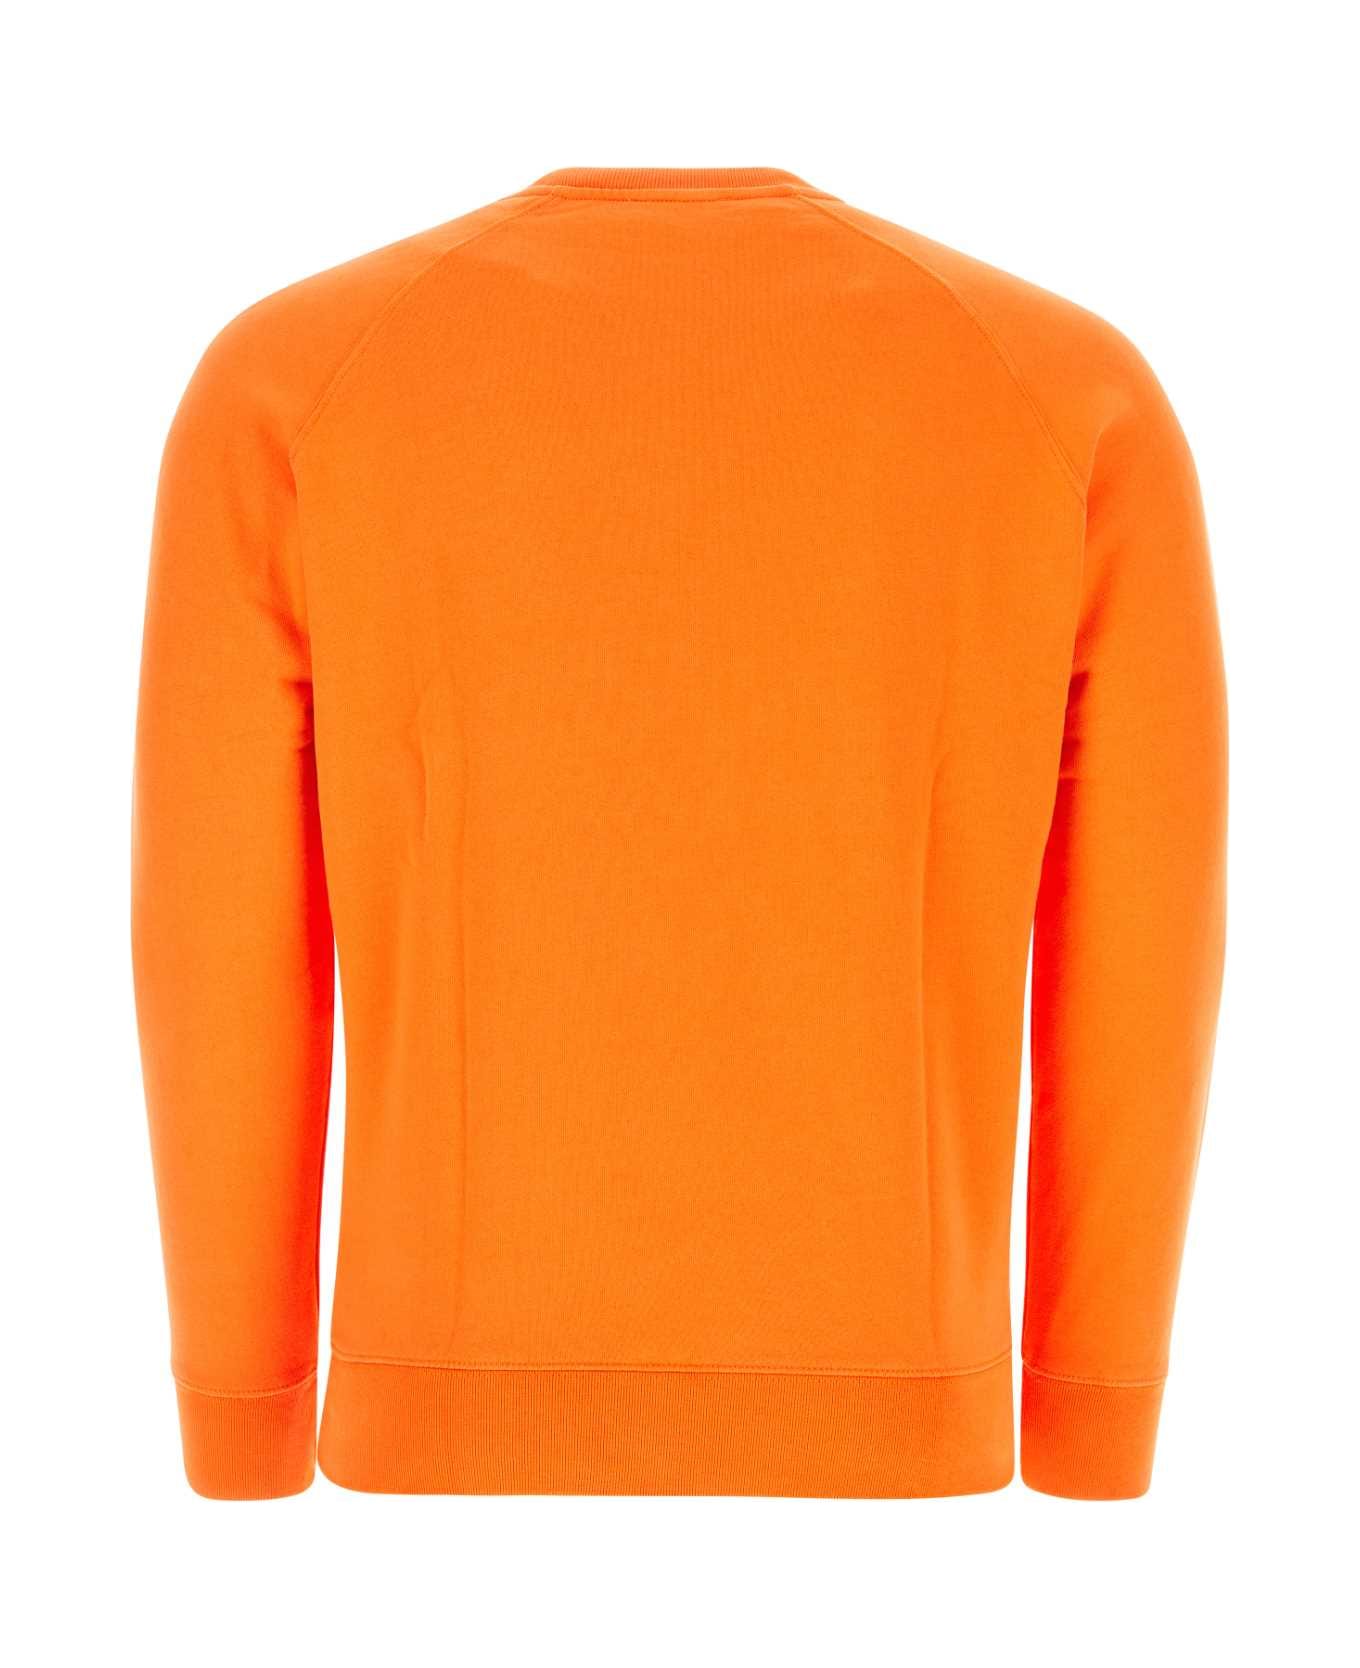 Maison Kitsuné Orange Cotton Sweatshirt - P851